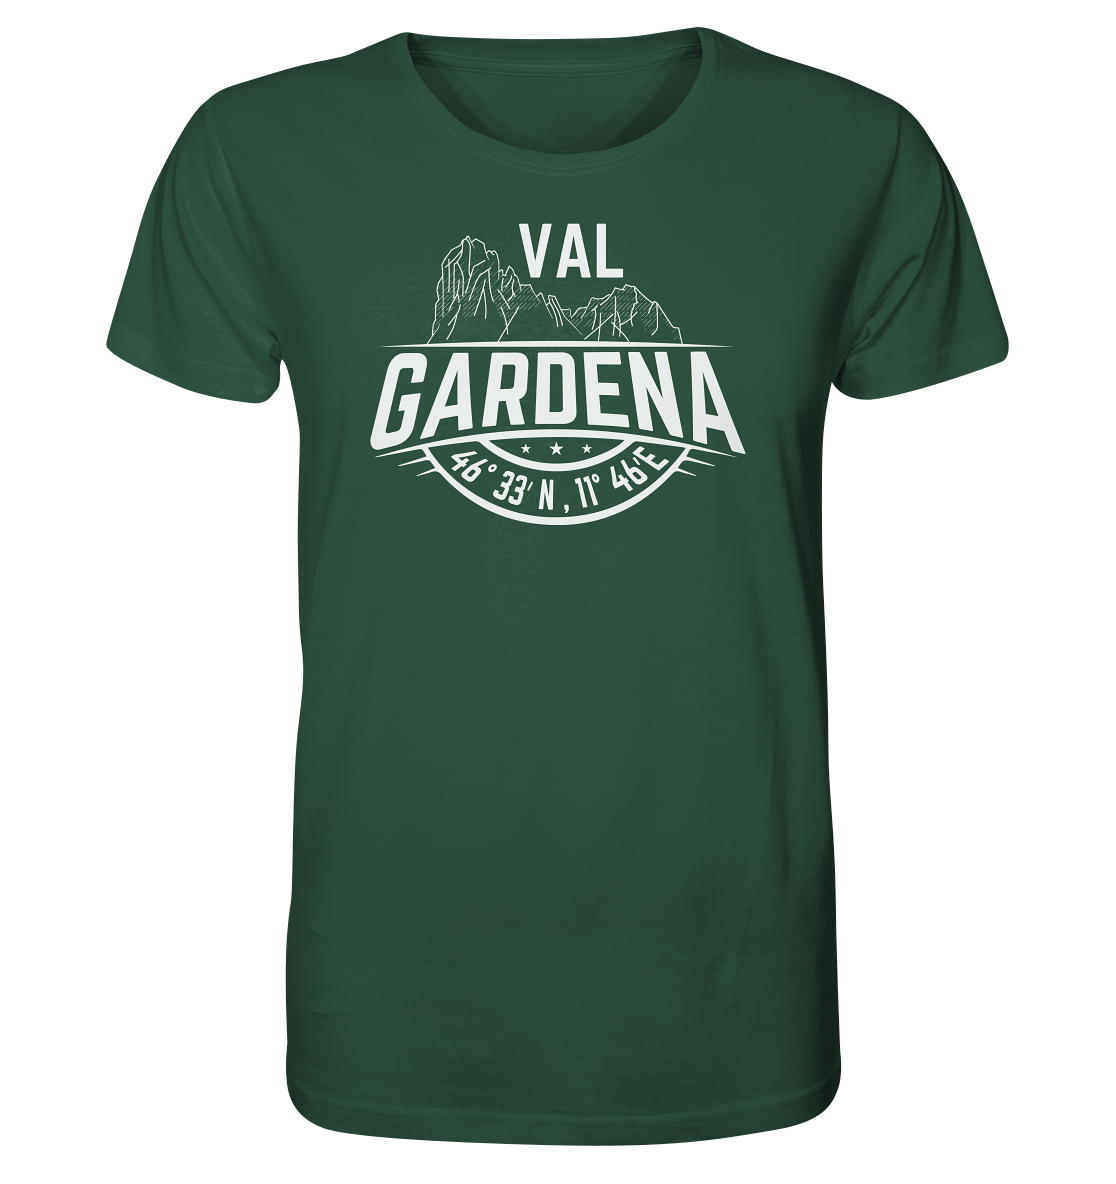 Coordinate Val Gardena - Maglietta premium uomo